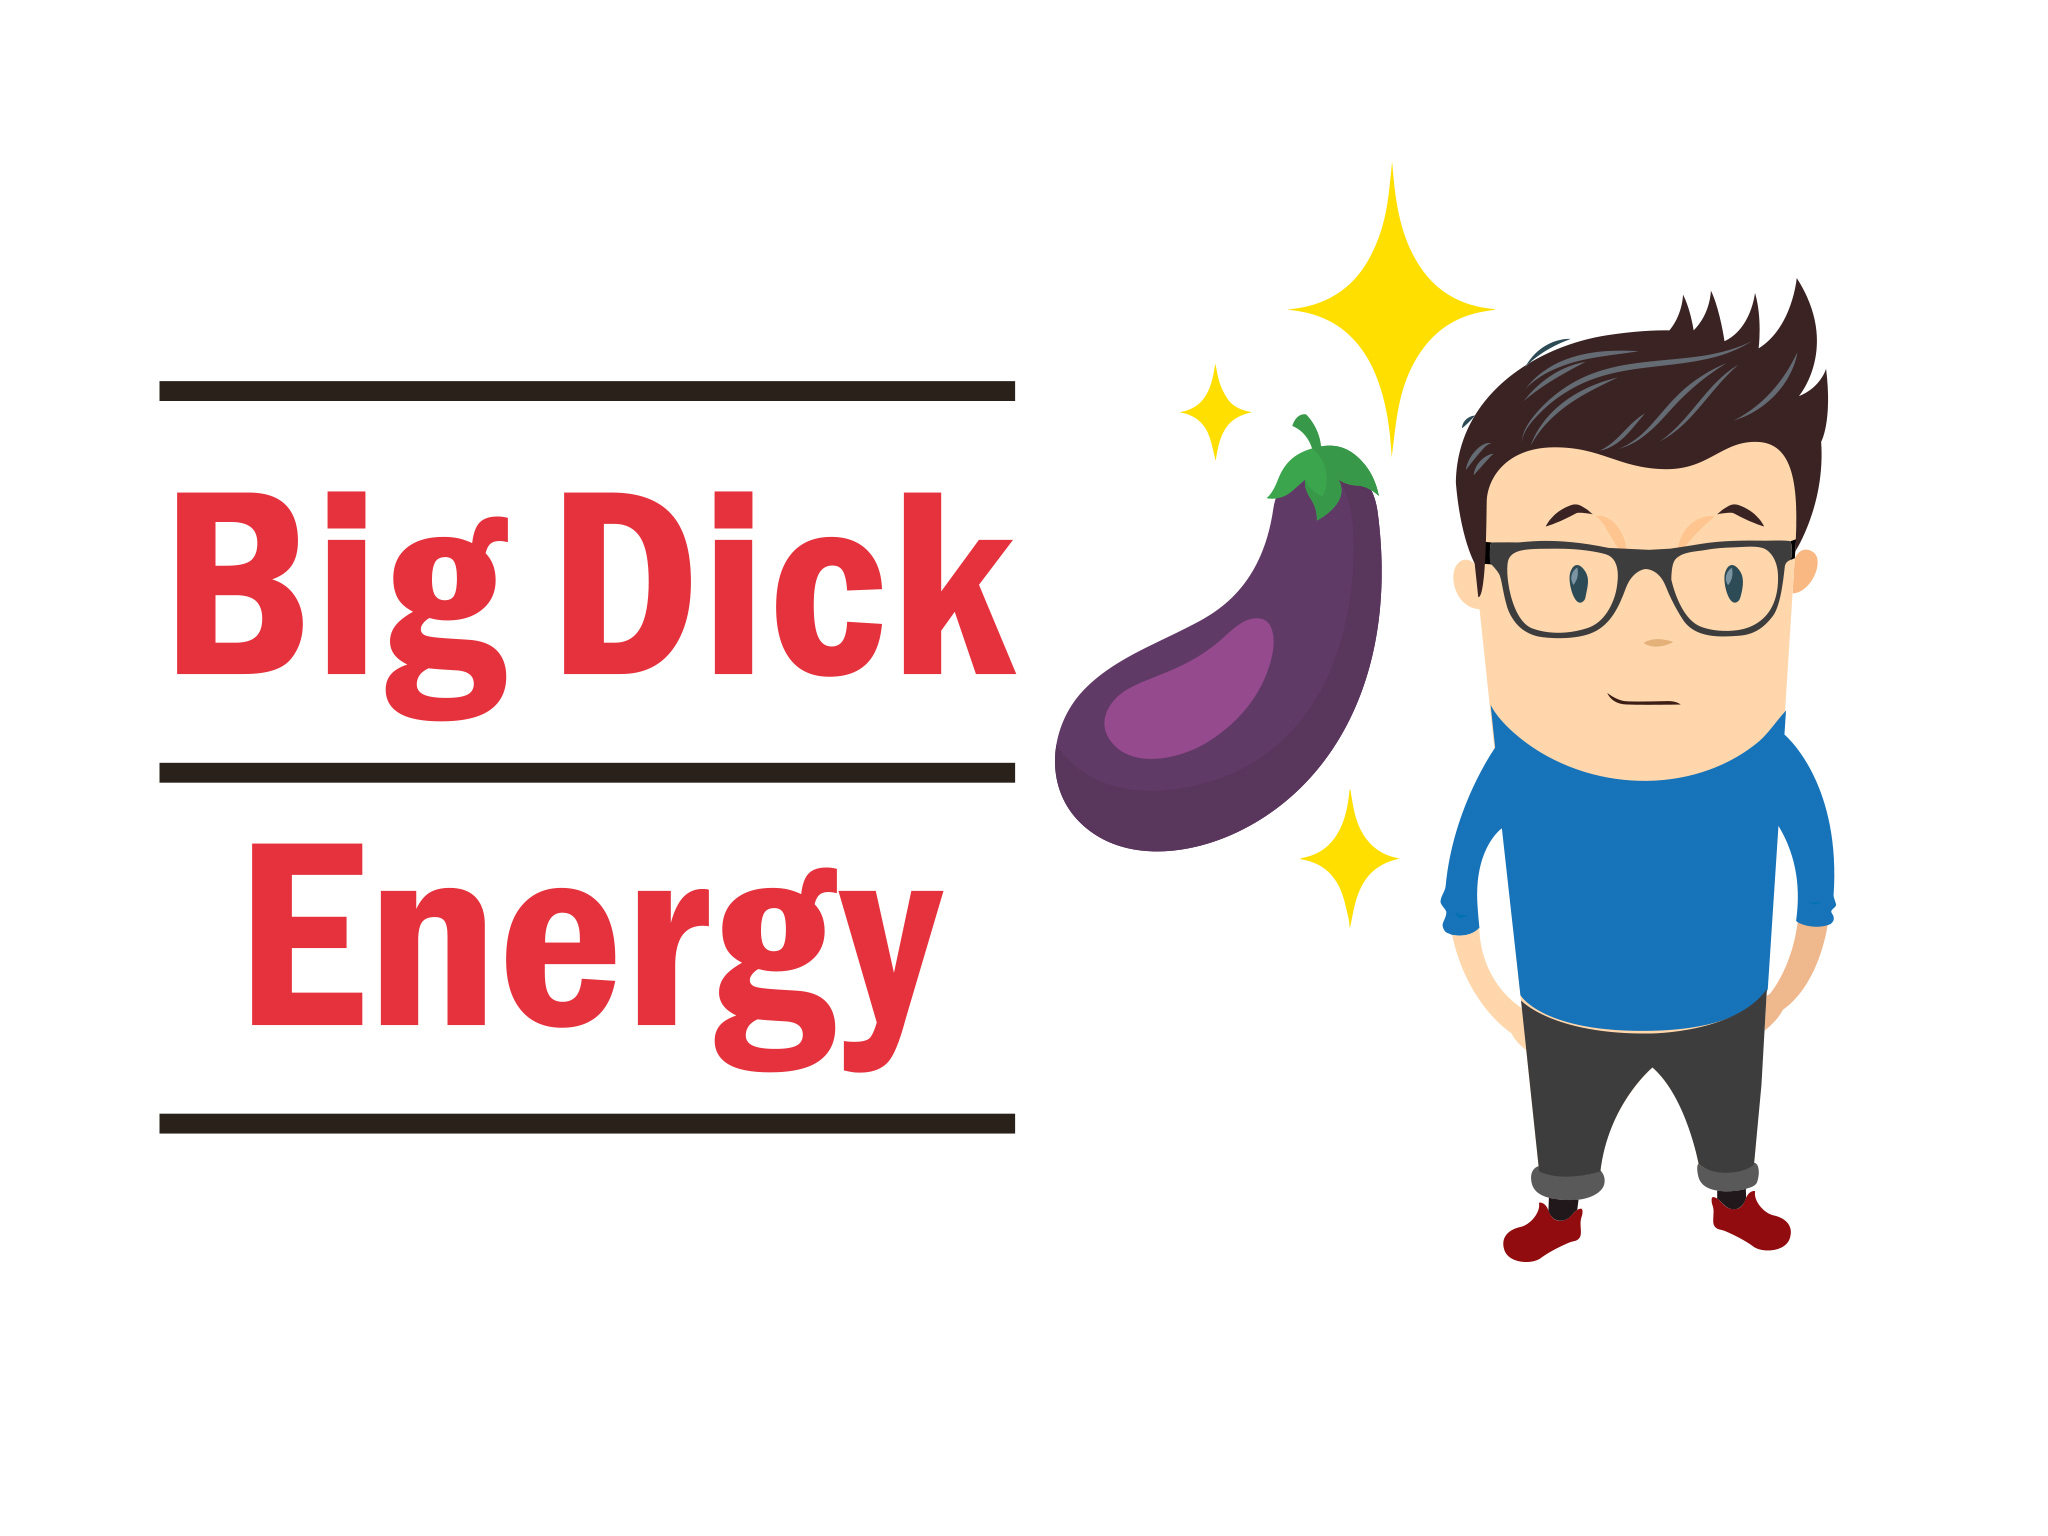 Biggest dick energy